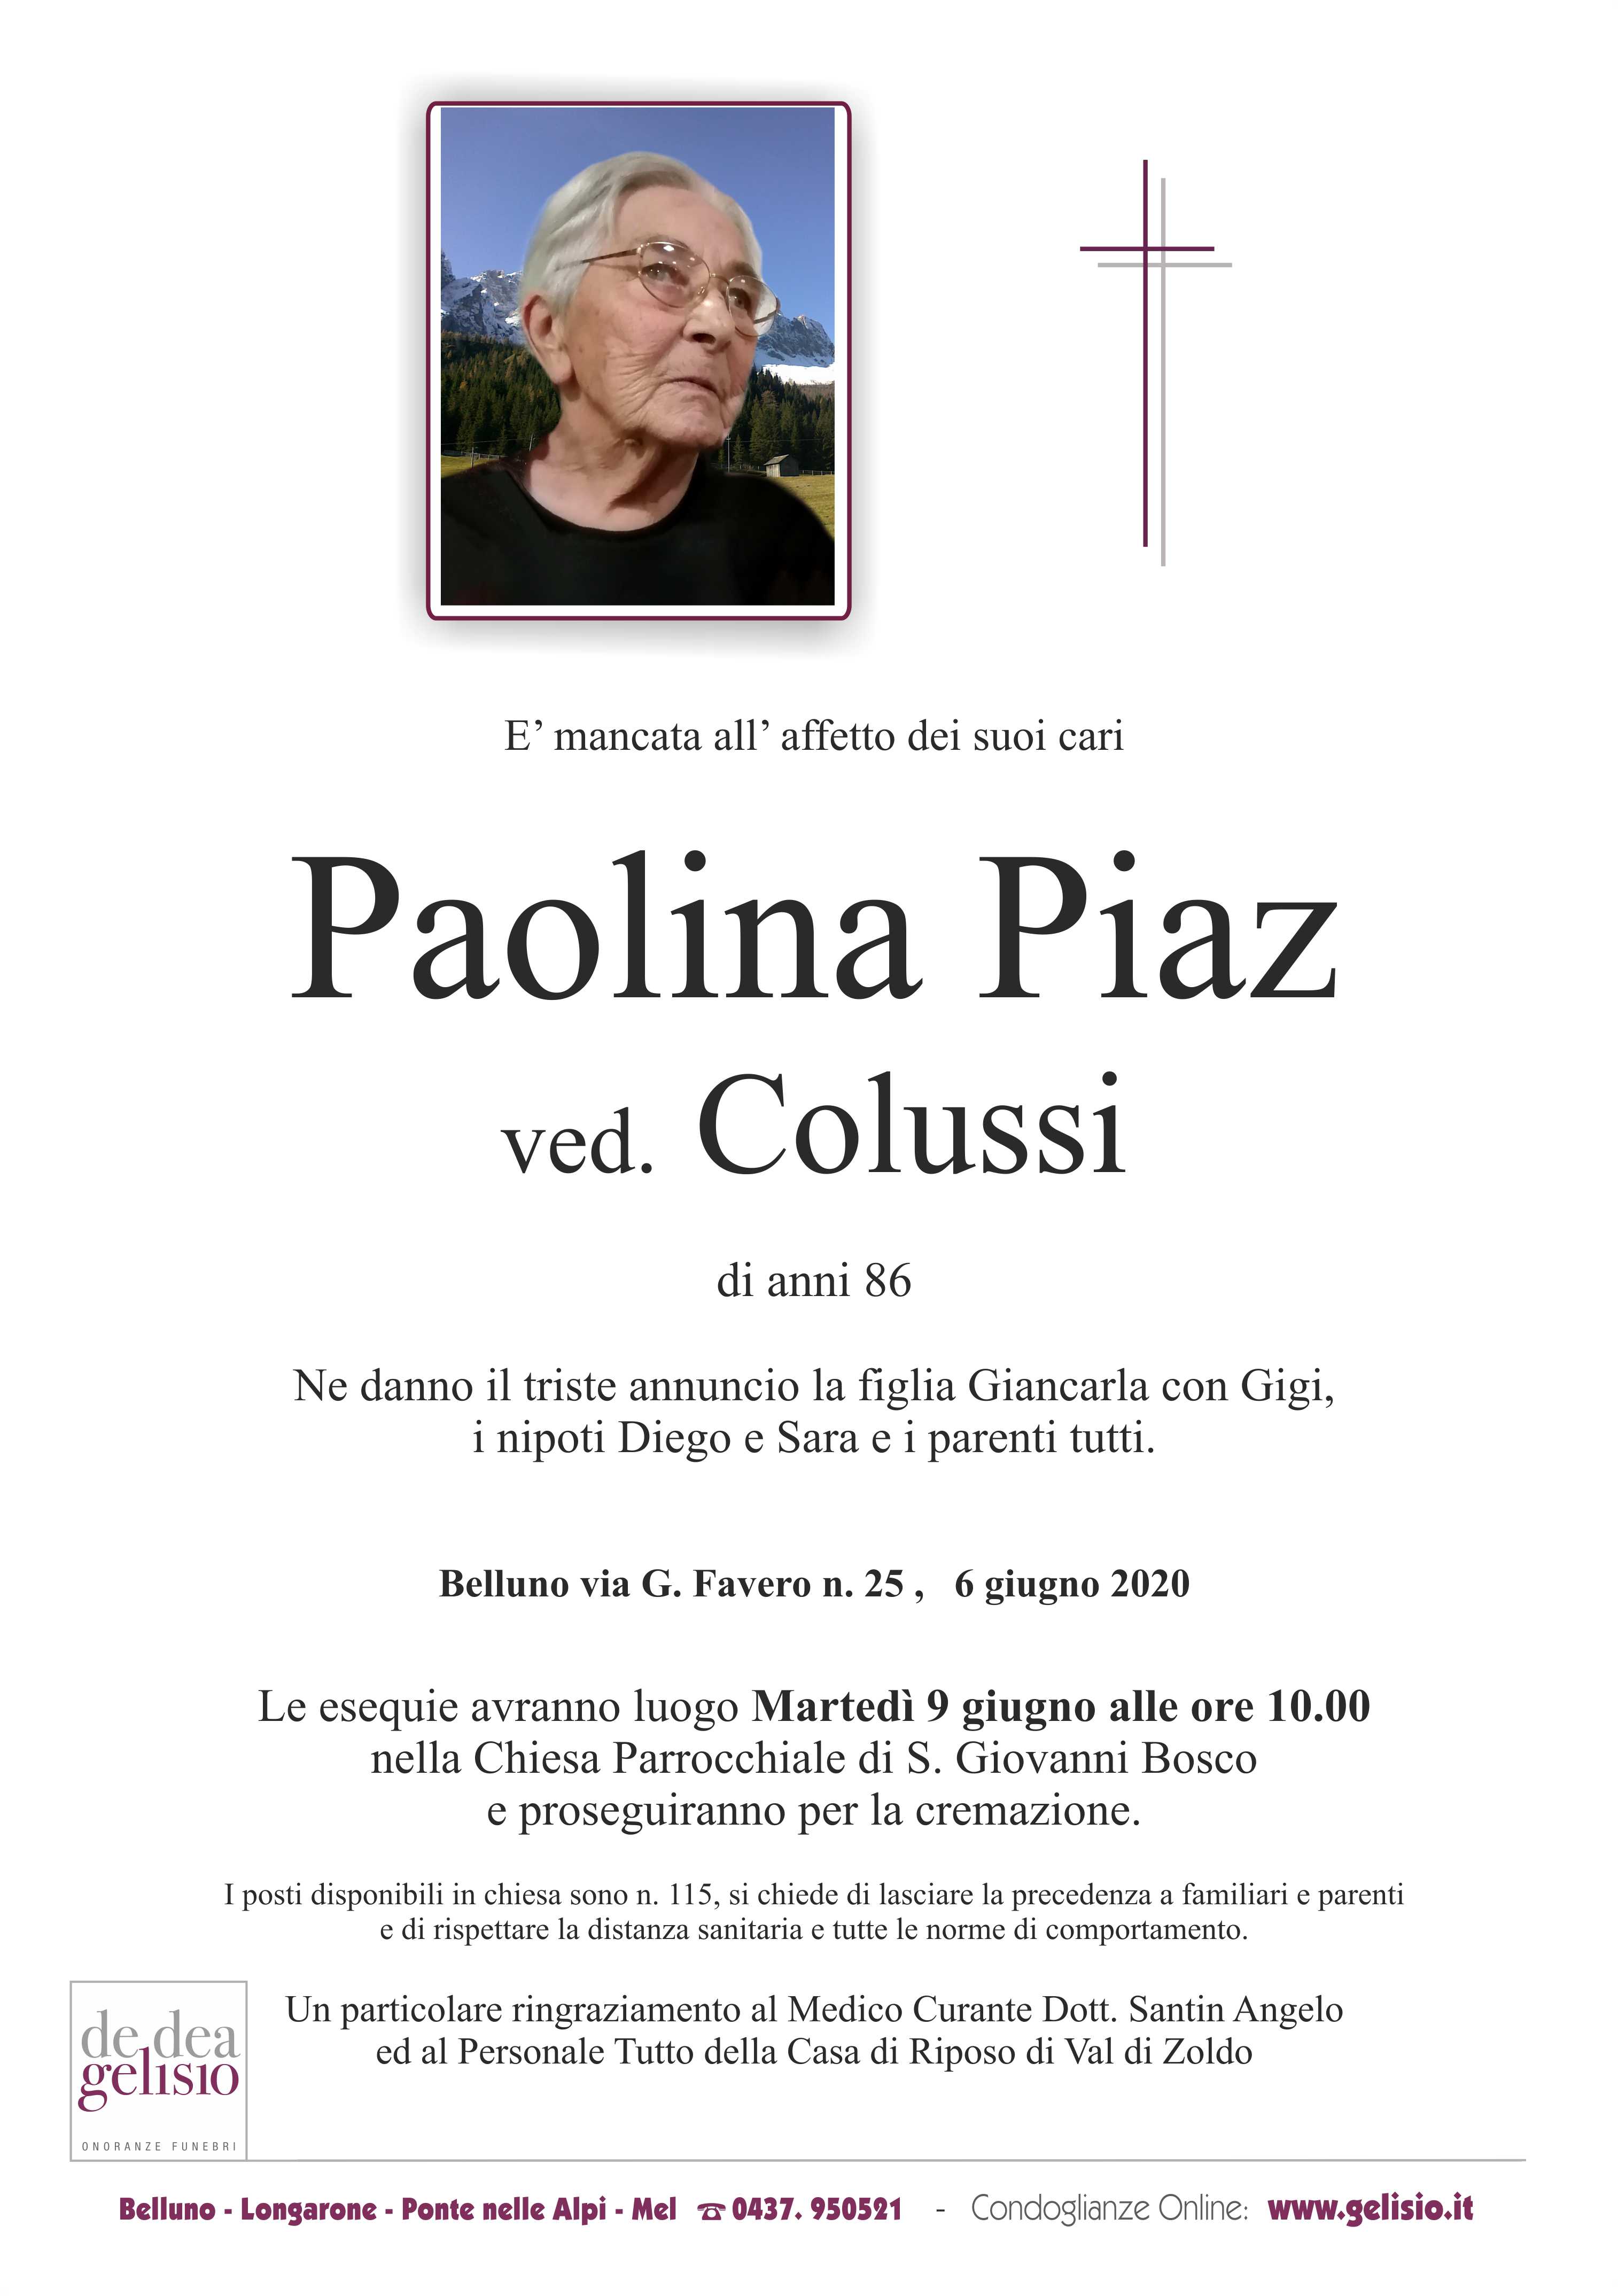 Piaz Paolina